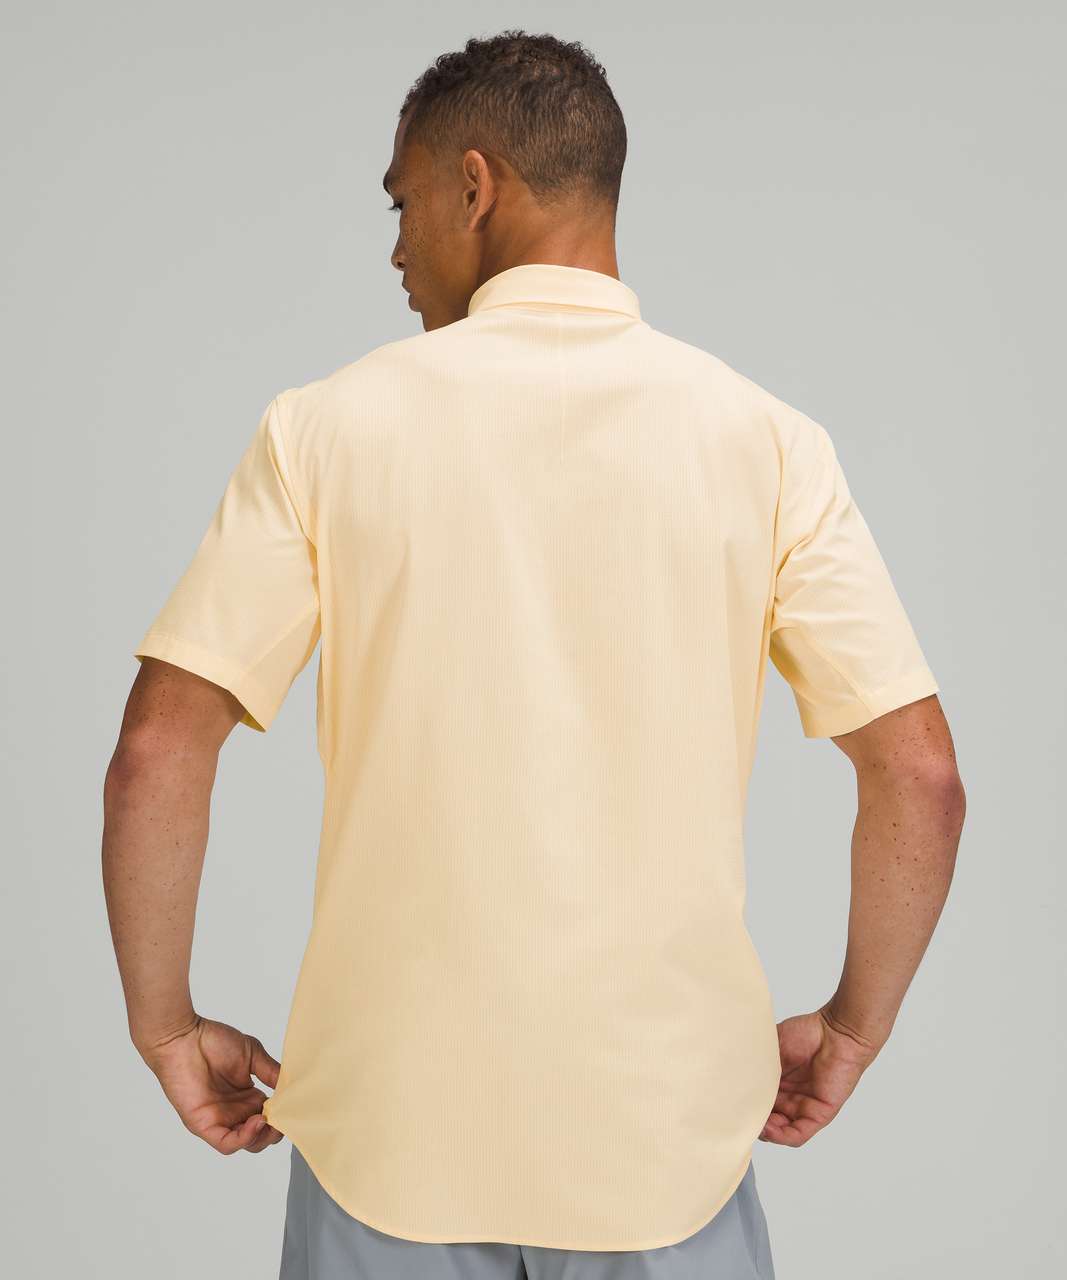 Lululemon Airing Easy Short Sleeve Shirt *Ventlight™ Mesh - Heathered Lemon Chiffon